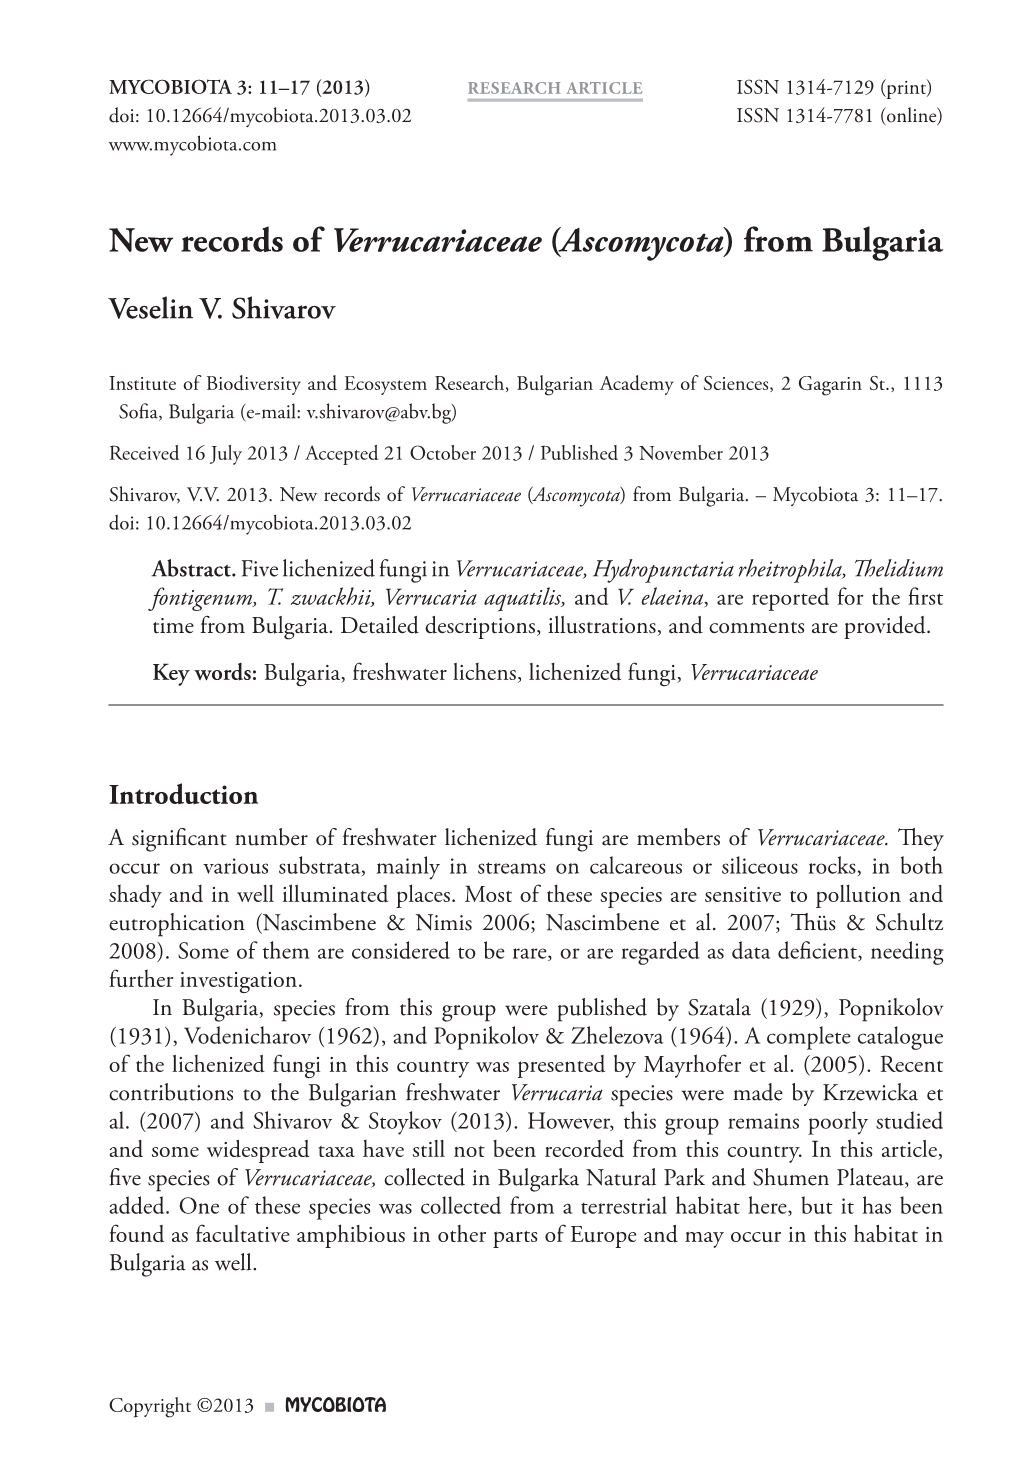 New Records of Verrucariaceae (Ascomycota) from Bulgaria